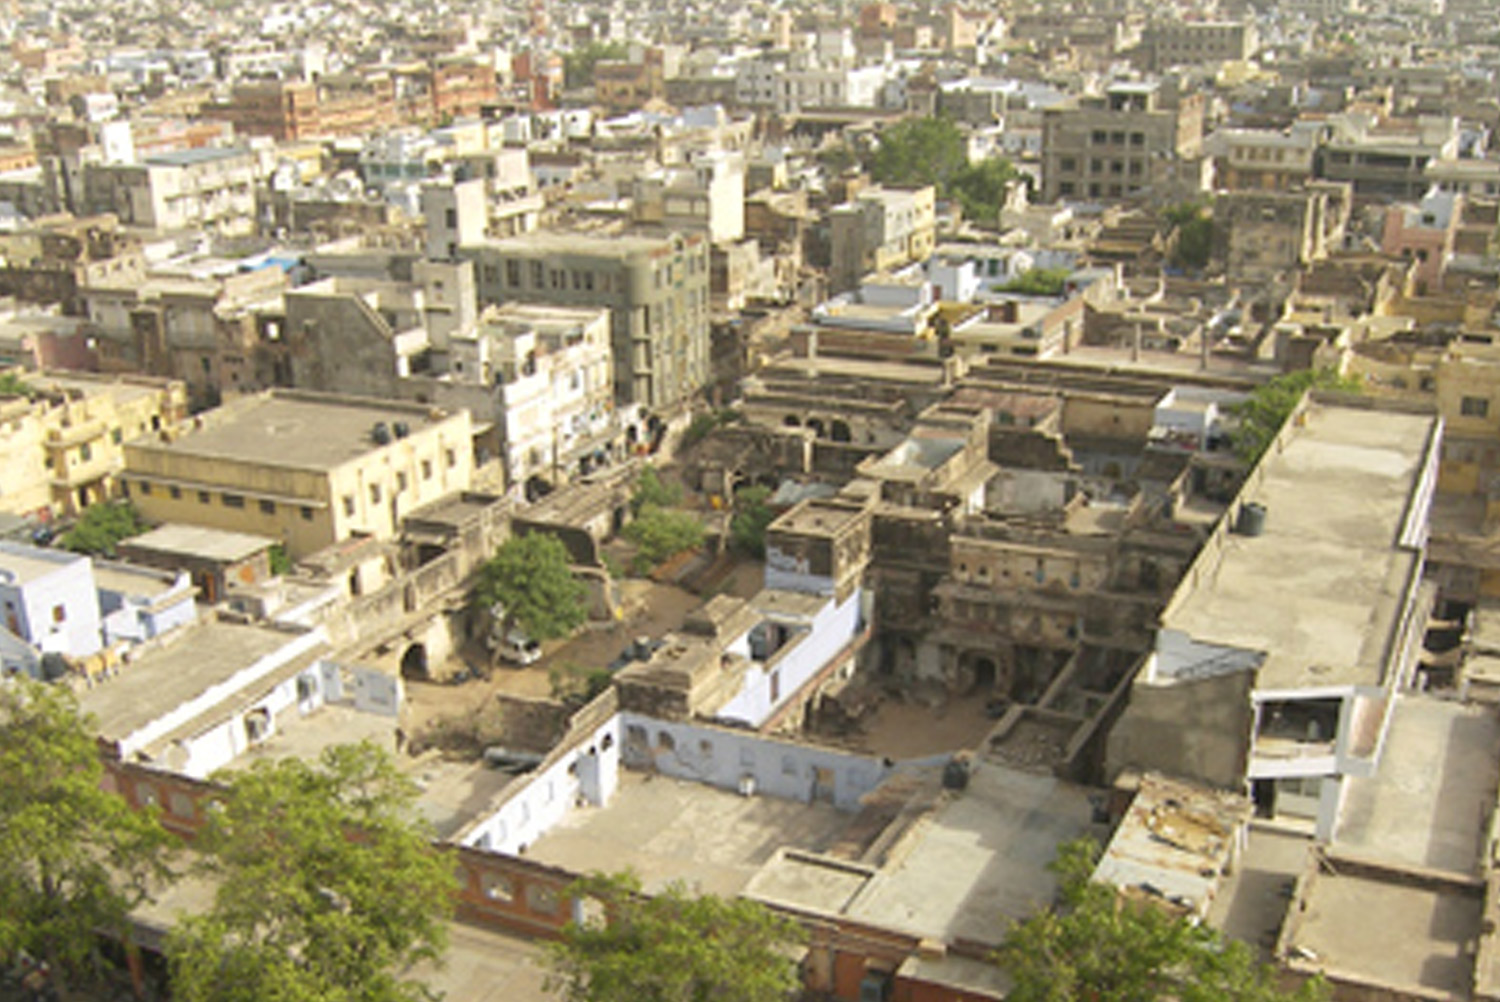 City View of Jaipur